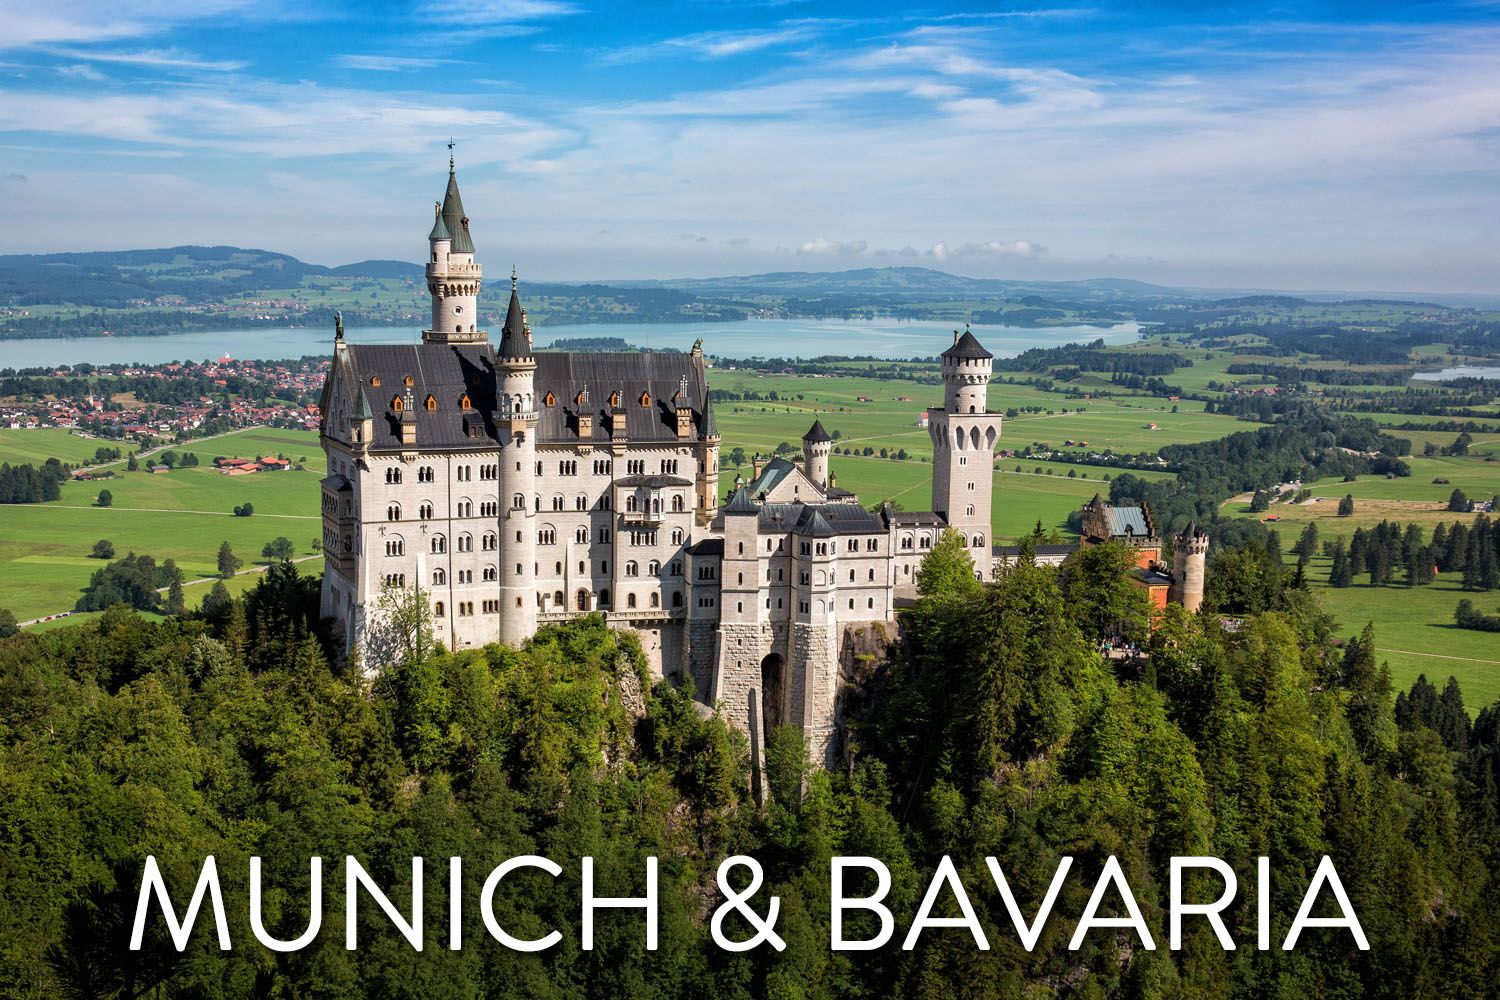 Munich and Bavaria